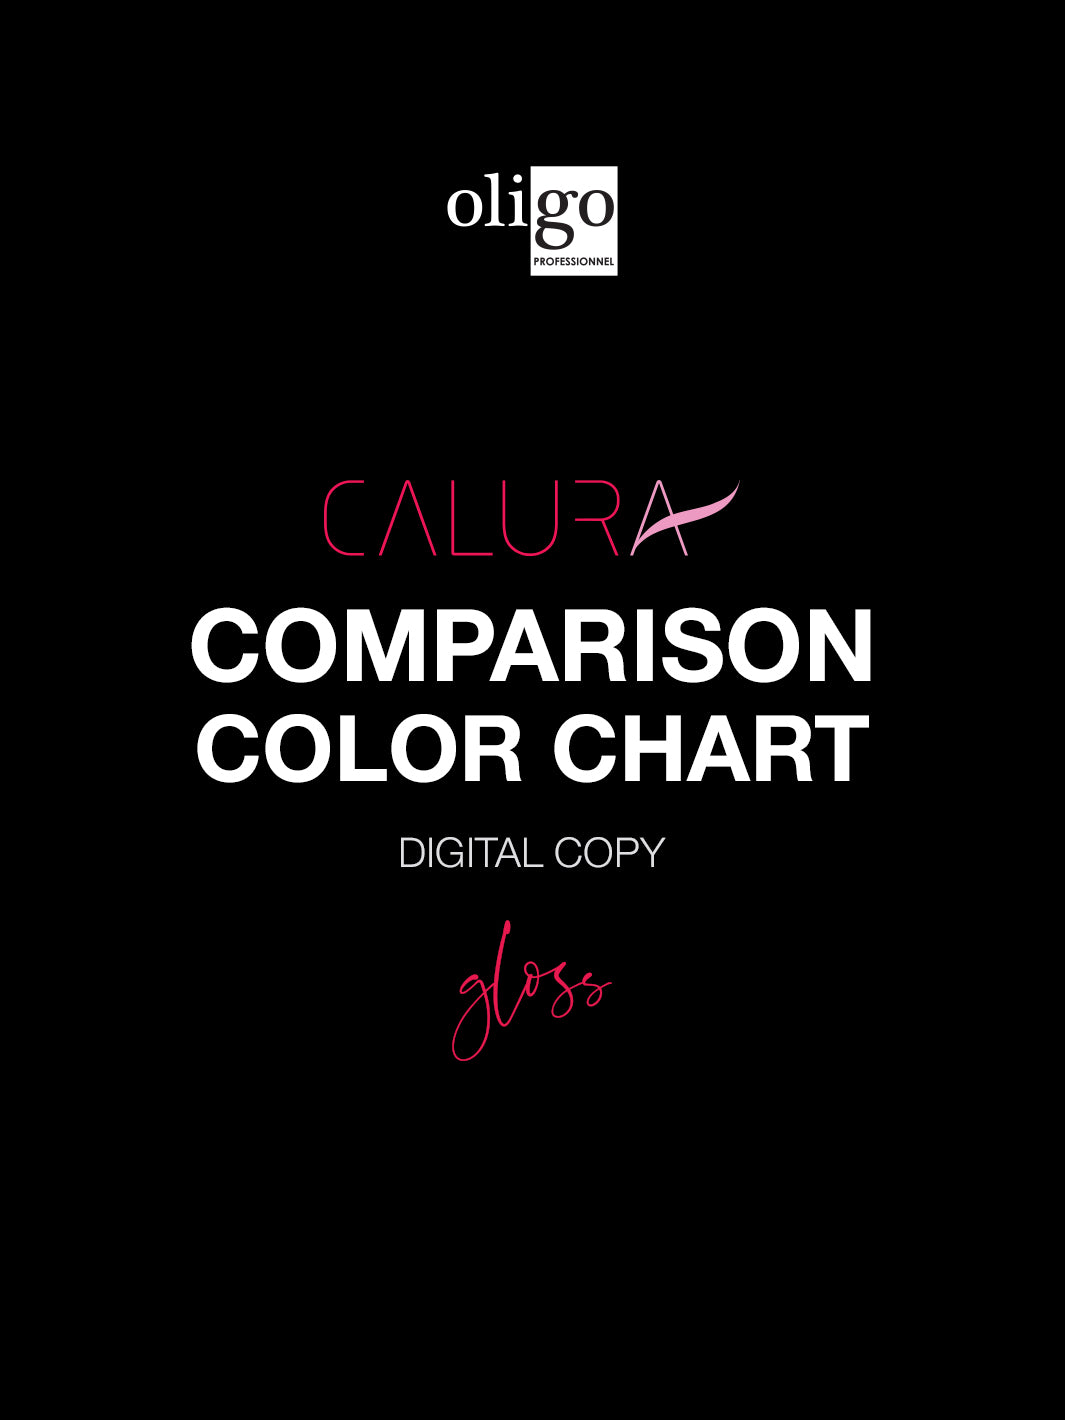 Calura Permanent Color Swatch Chart (digital copy) – Oobalie Pro